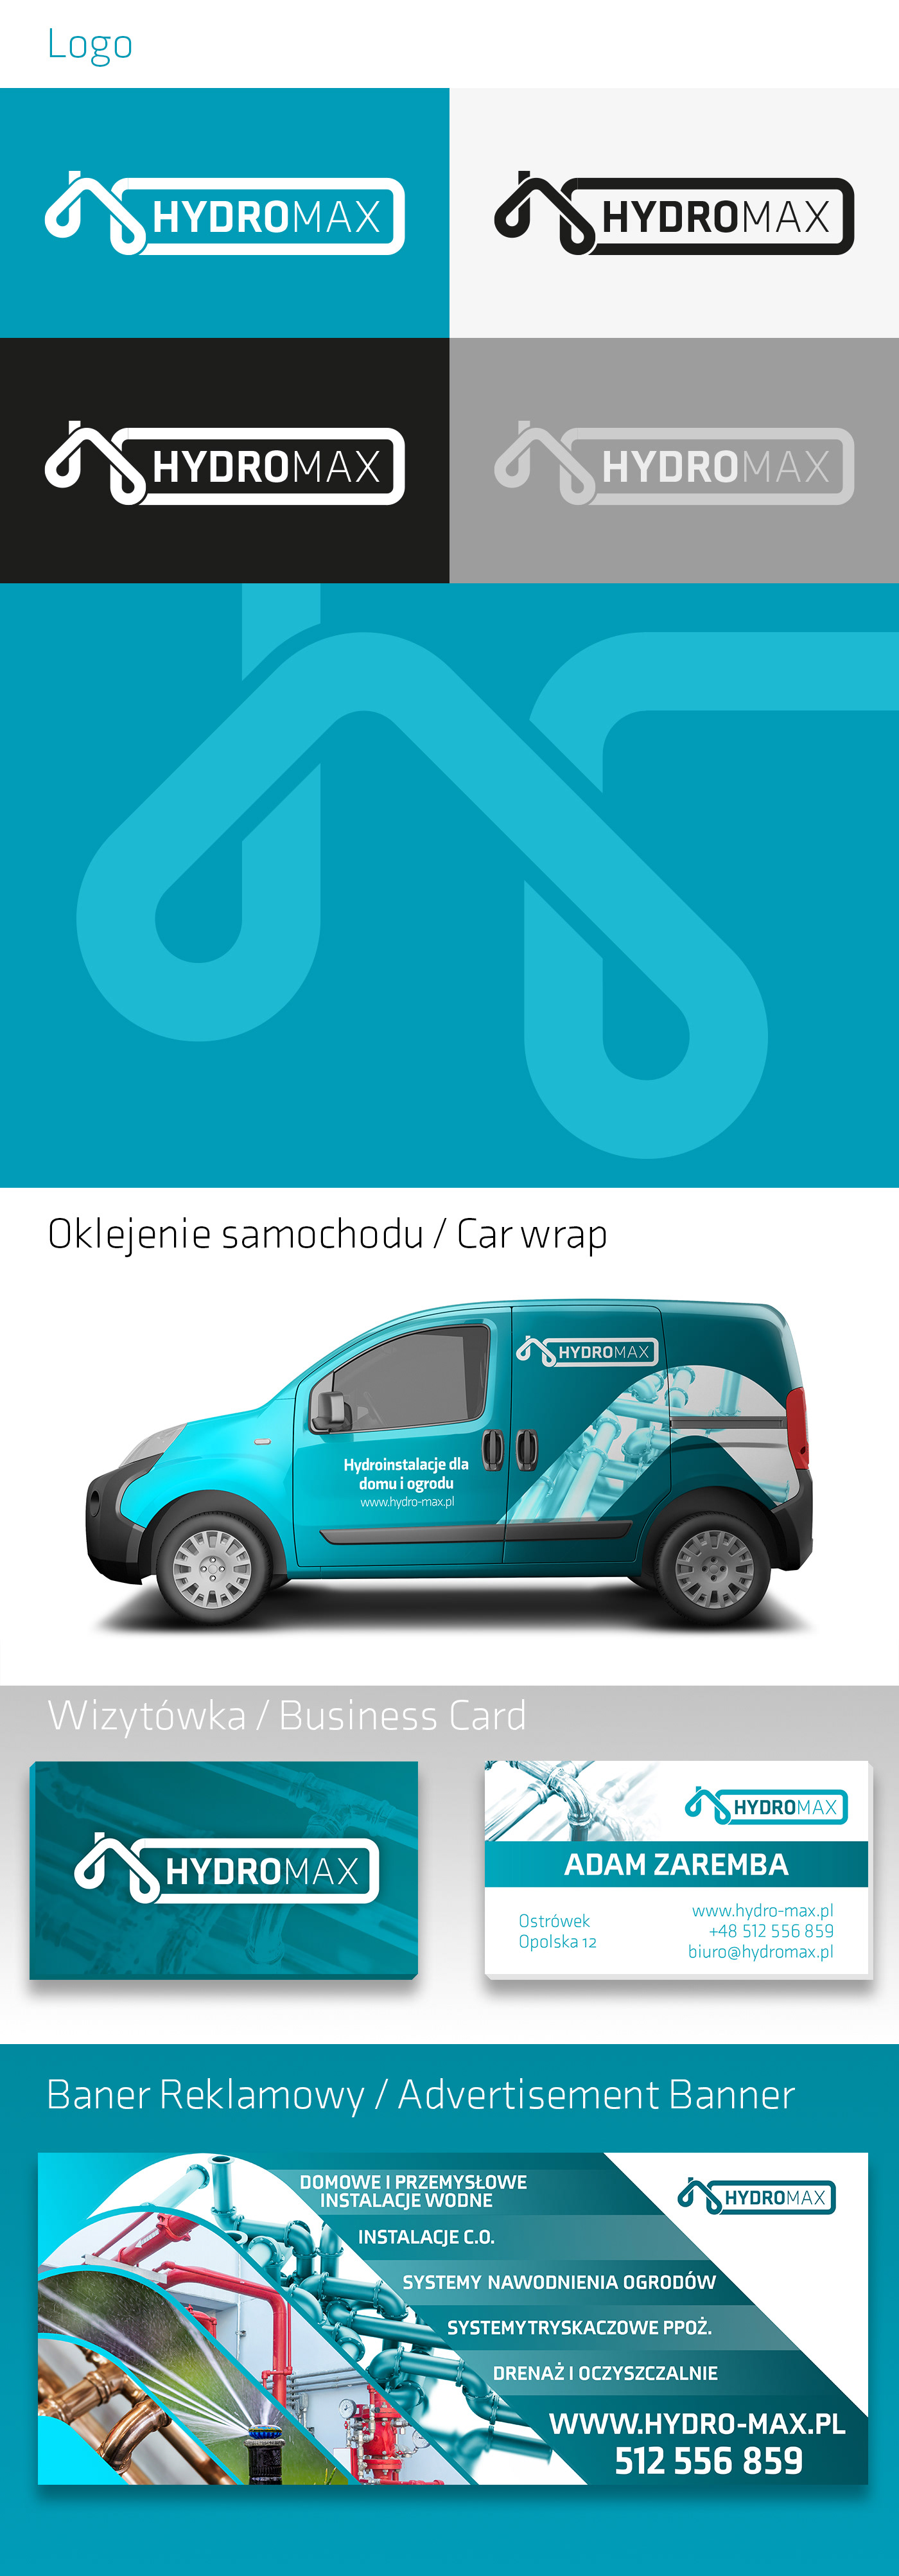 advertisement baner banner car company logo reklama Wrap